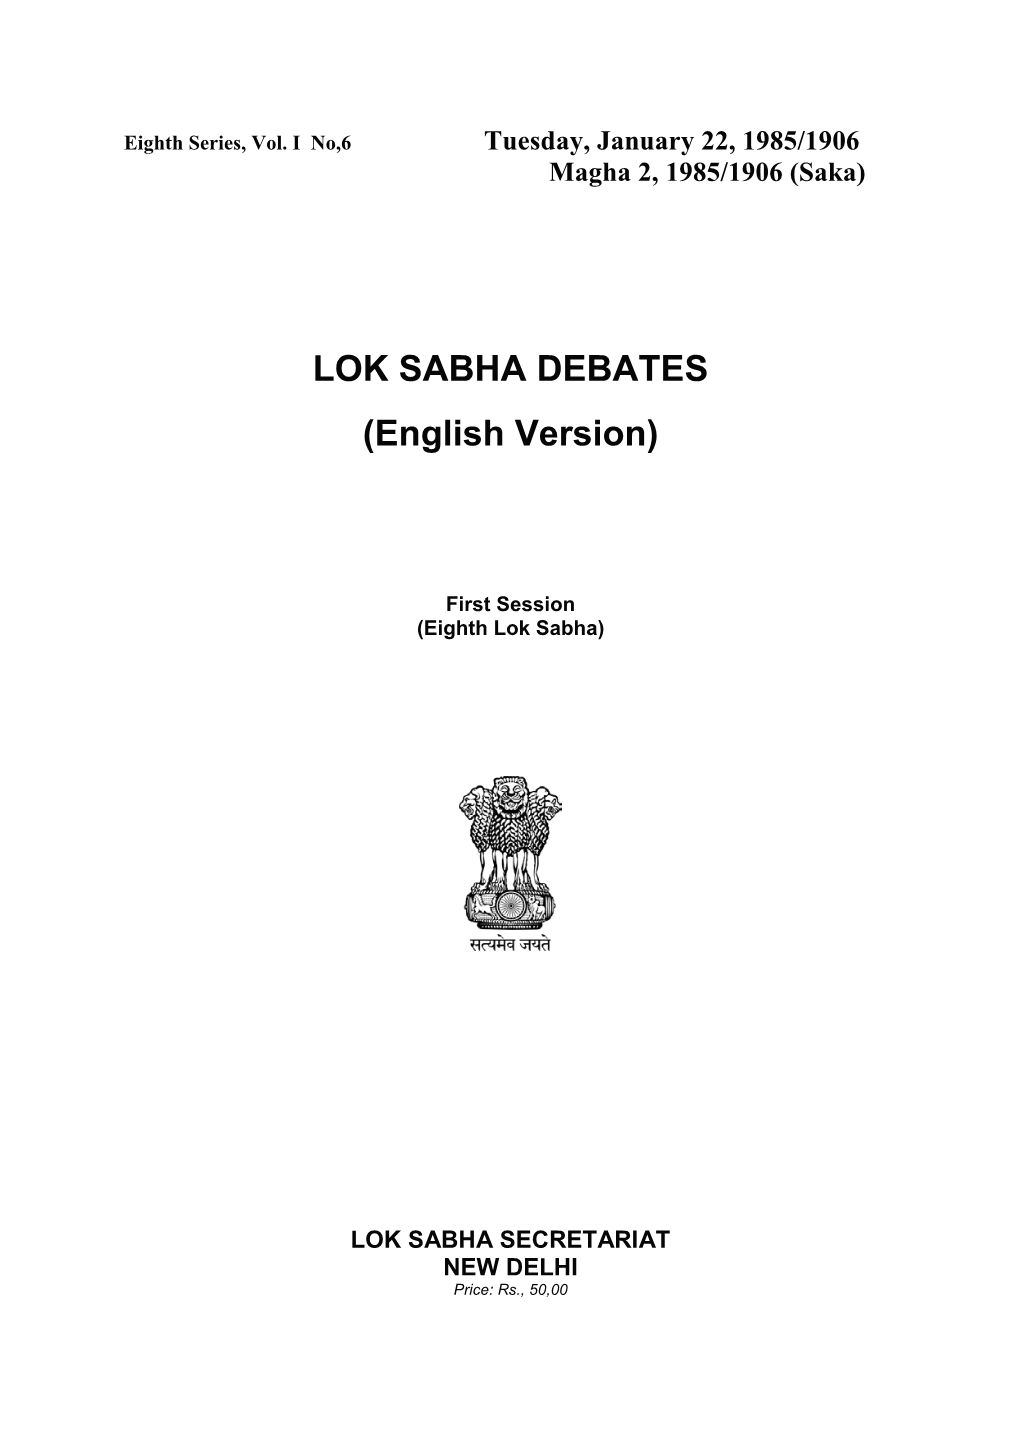 Lok Sabha Debates for the Eighth Lot Sdbha